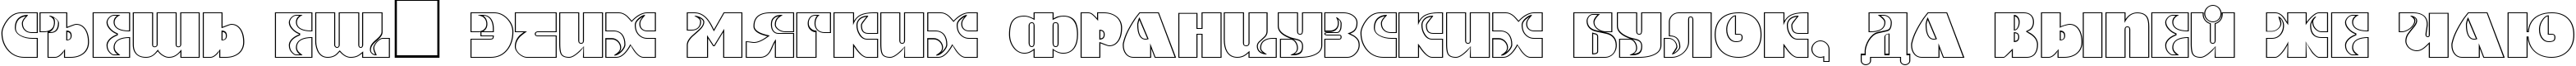 Пример написания шрифтом DSMotterHo текста на русском